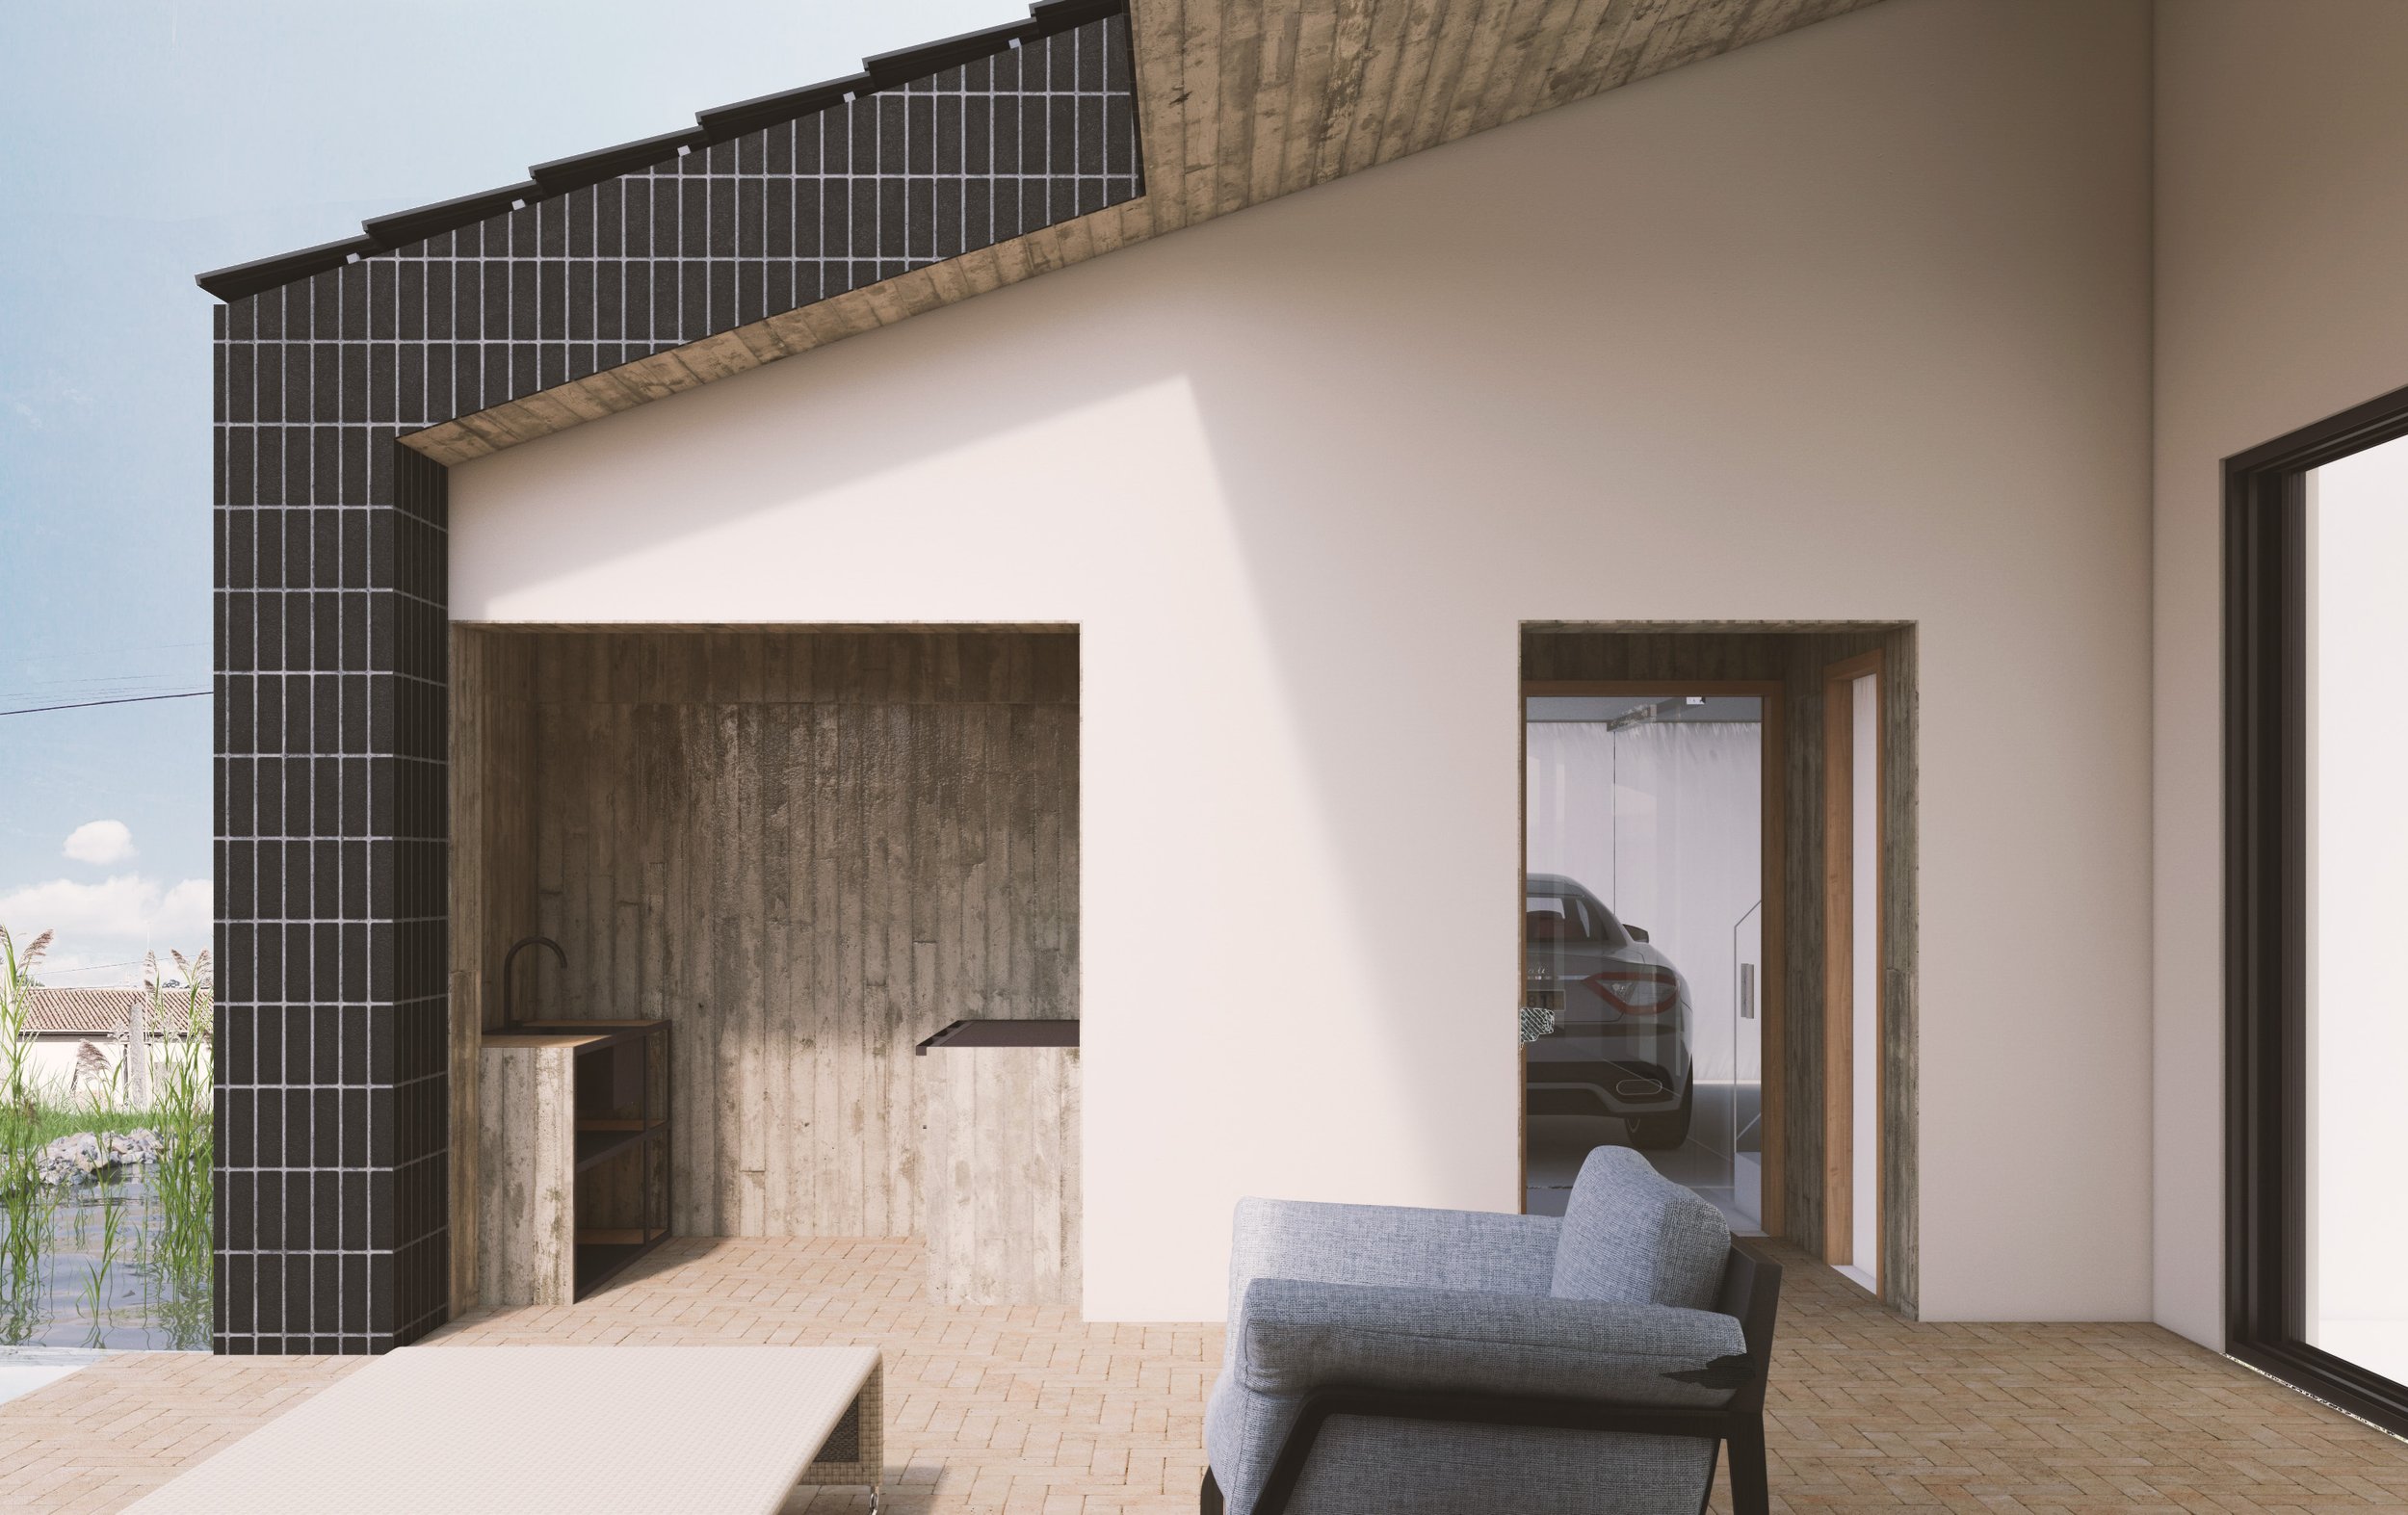 Moradia Sakura - eva atelier - arquitectura - projecto - oliveira de azeméis - arquitectos - porto (15).jpg